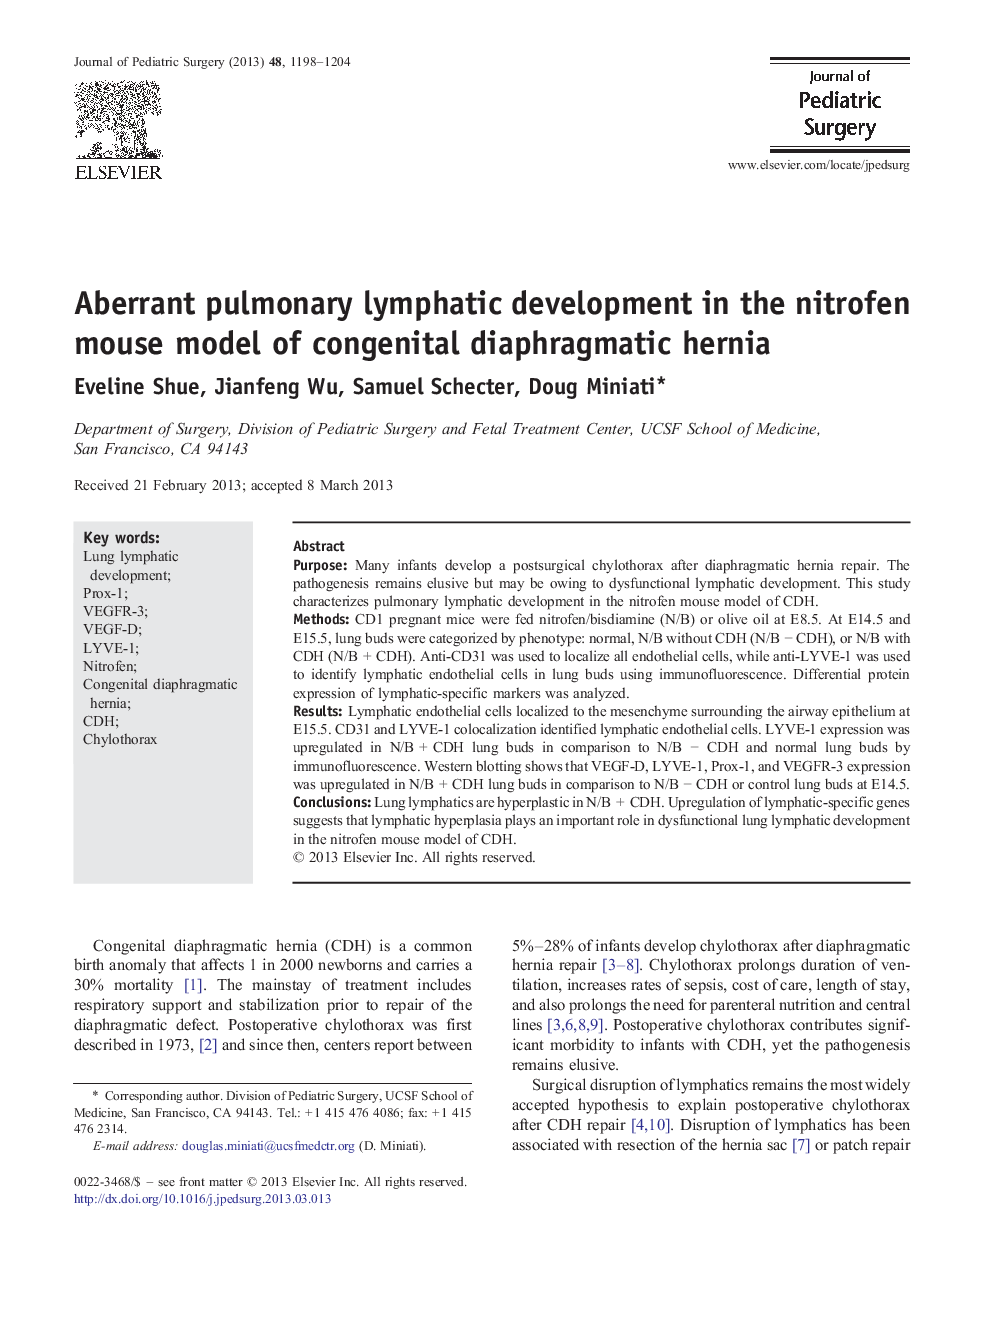 Aberrant pulmonary lymphatic development in the nitrofen mouse model of congenital diaphragmatic hernia